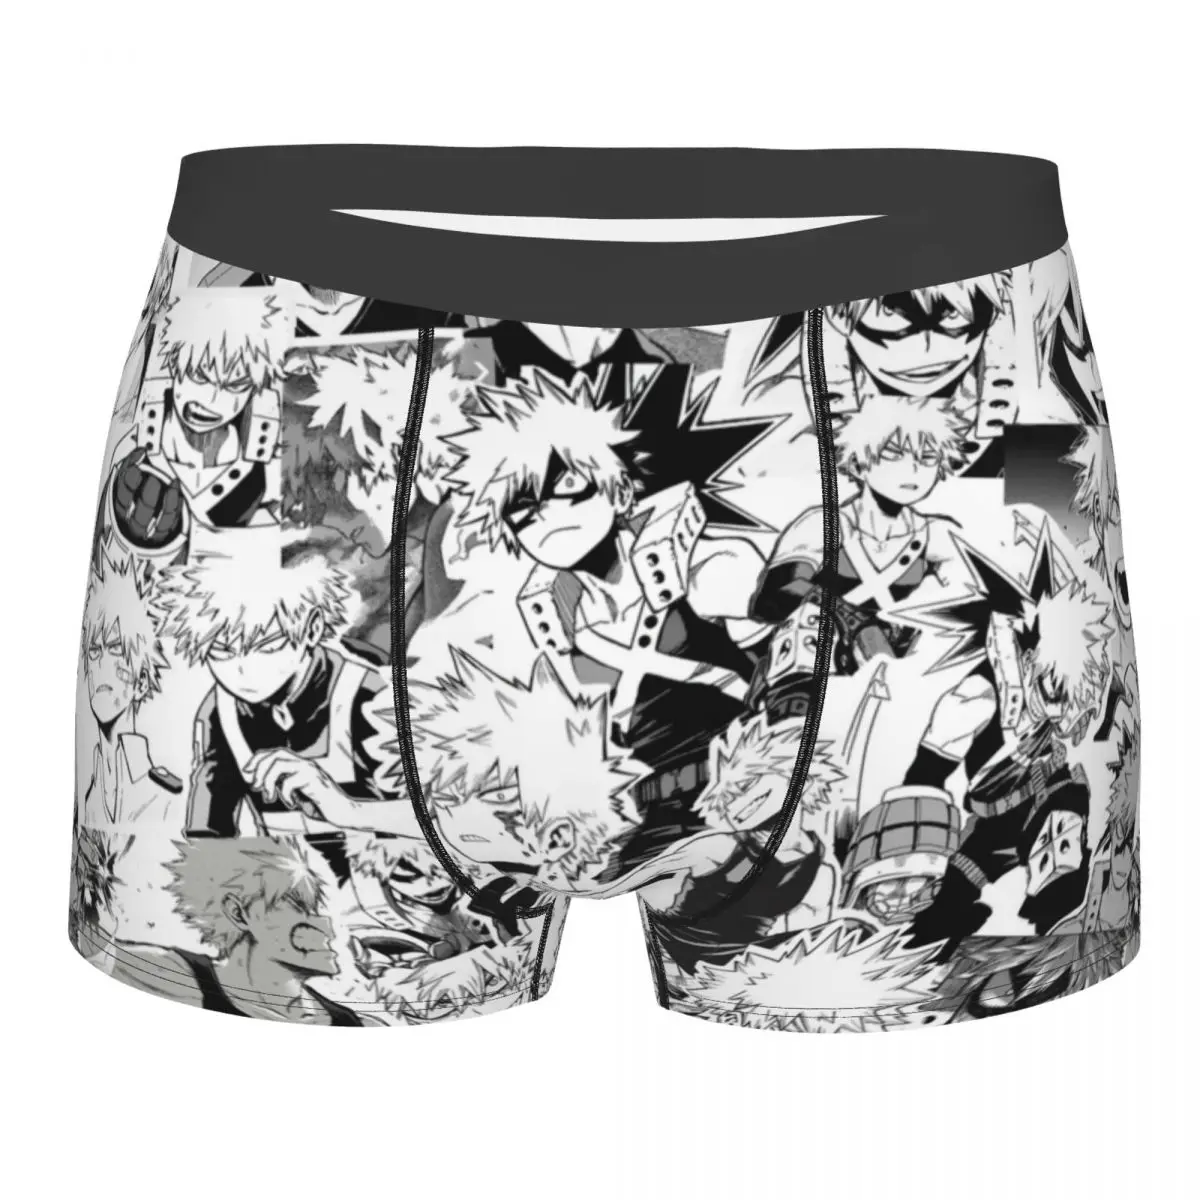 

Katsuki Bakugo Men's Underwear My Hero Academia Boku No Hero Academia Boxer Shorts Panties Funny Breathbale Underpants for Male